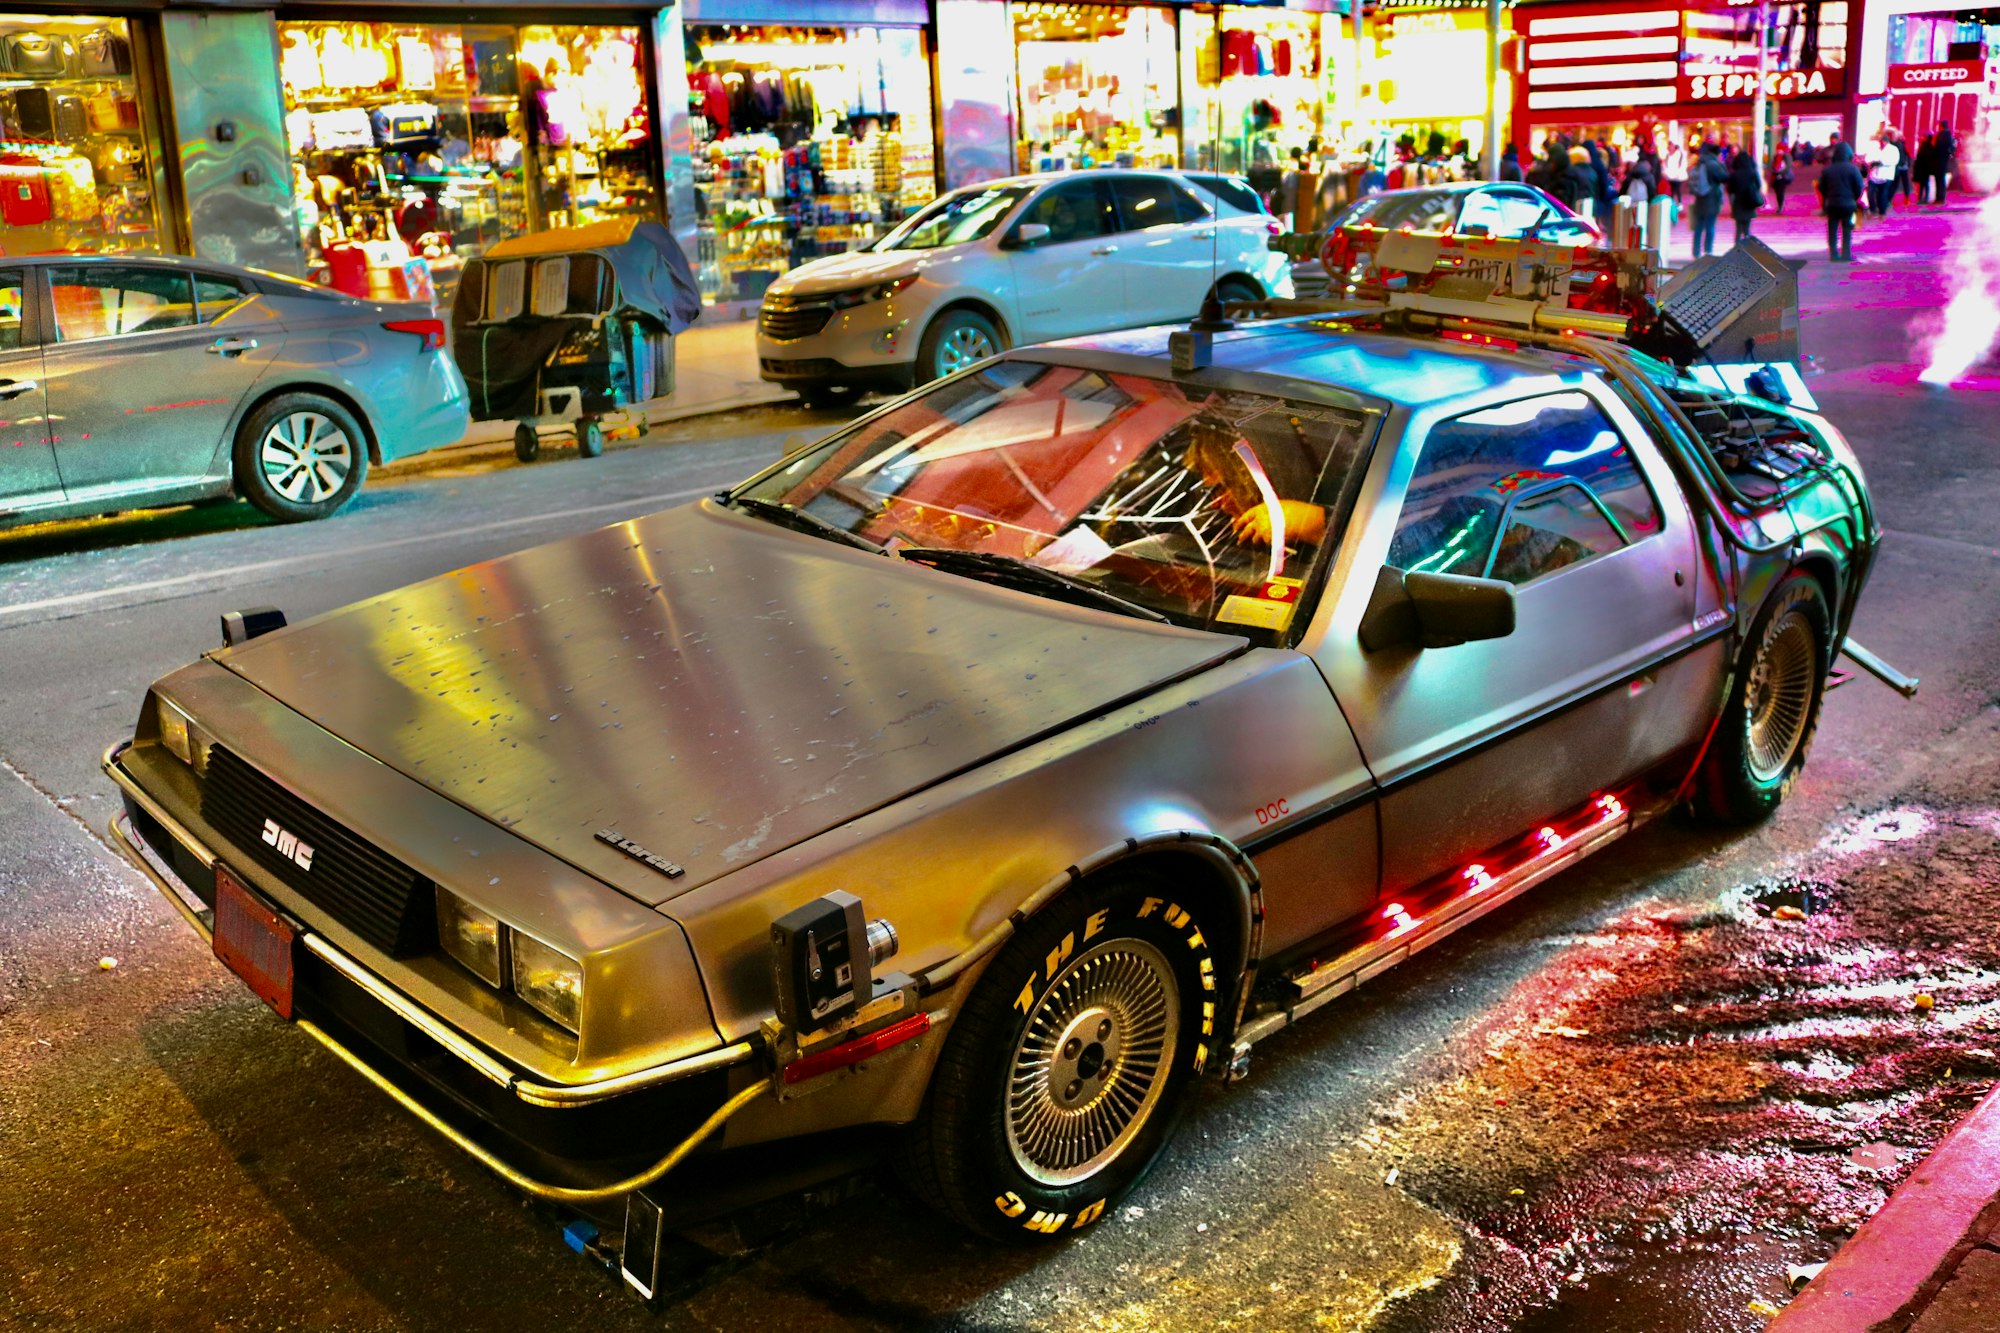 Back to the Future replica car in Times Square, New York